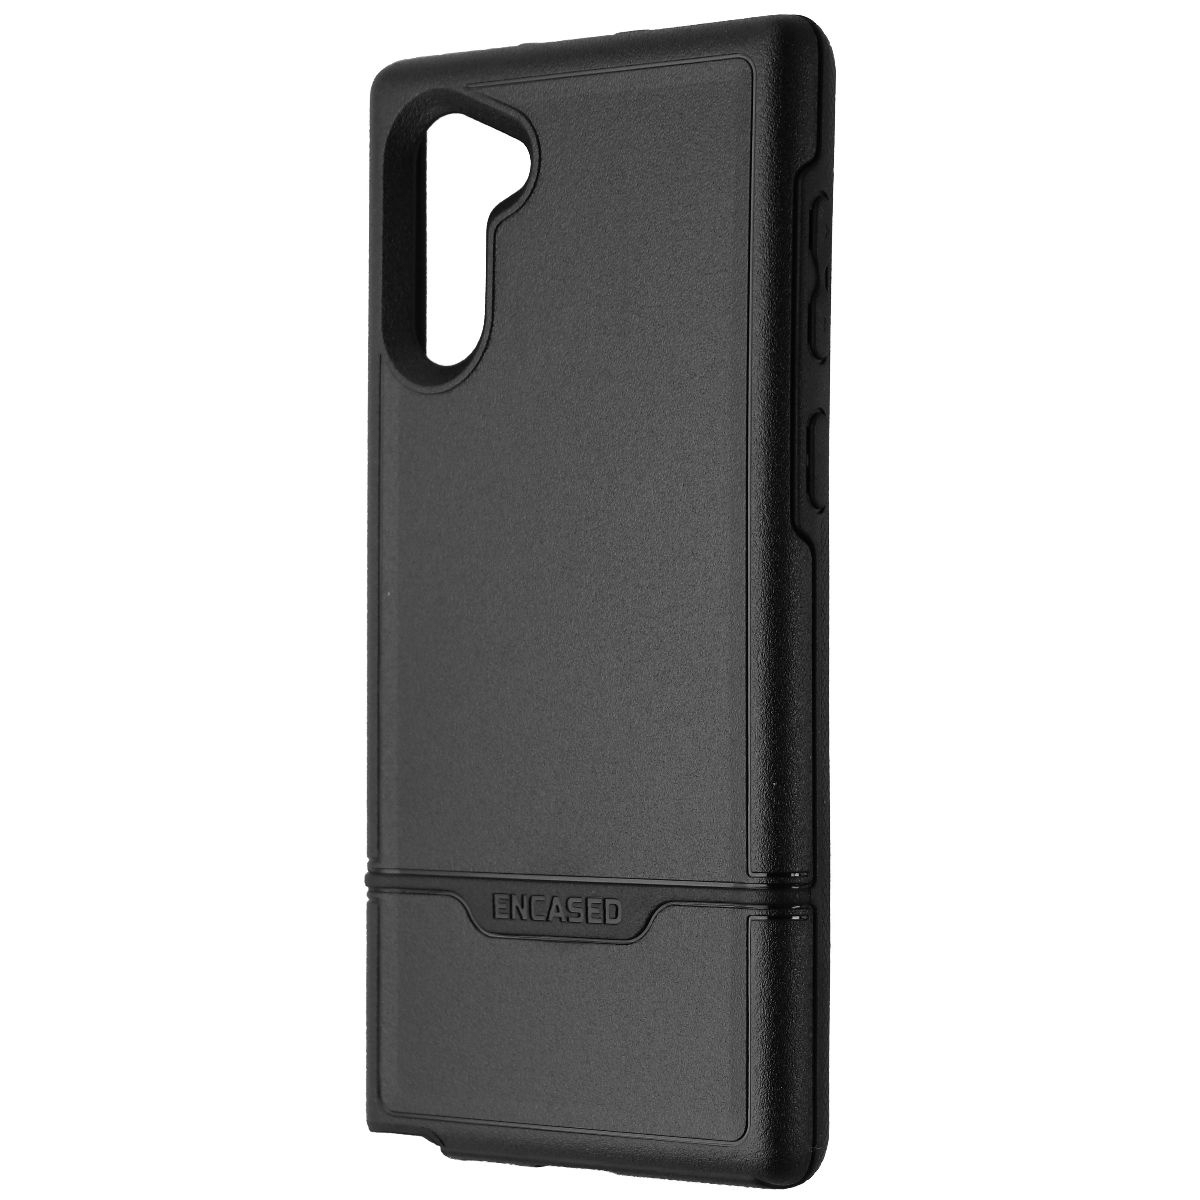 Encased - Rebel Case -Case For Galaxy Note 10 - Black